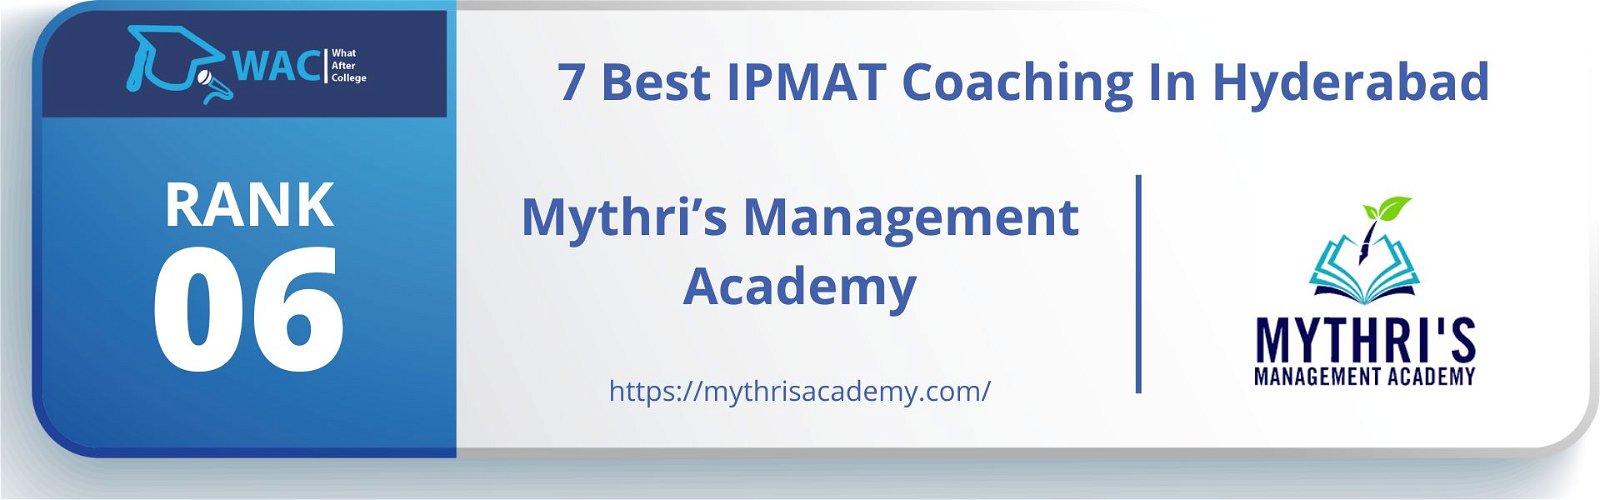 IPMAT Coaching In Hyderabad